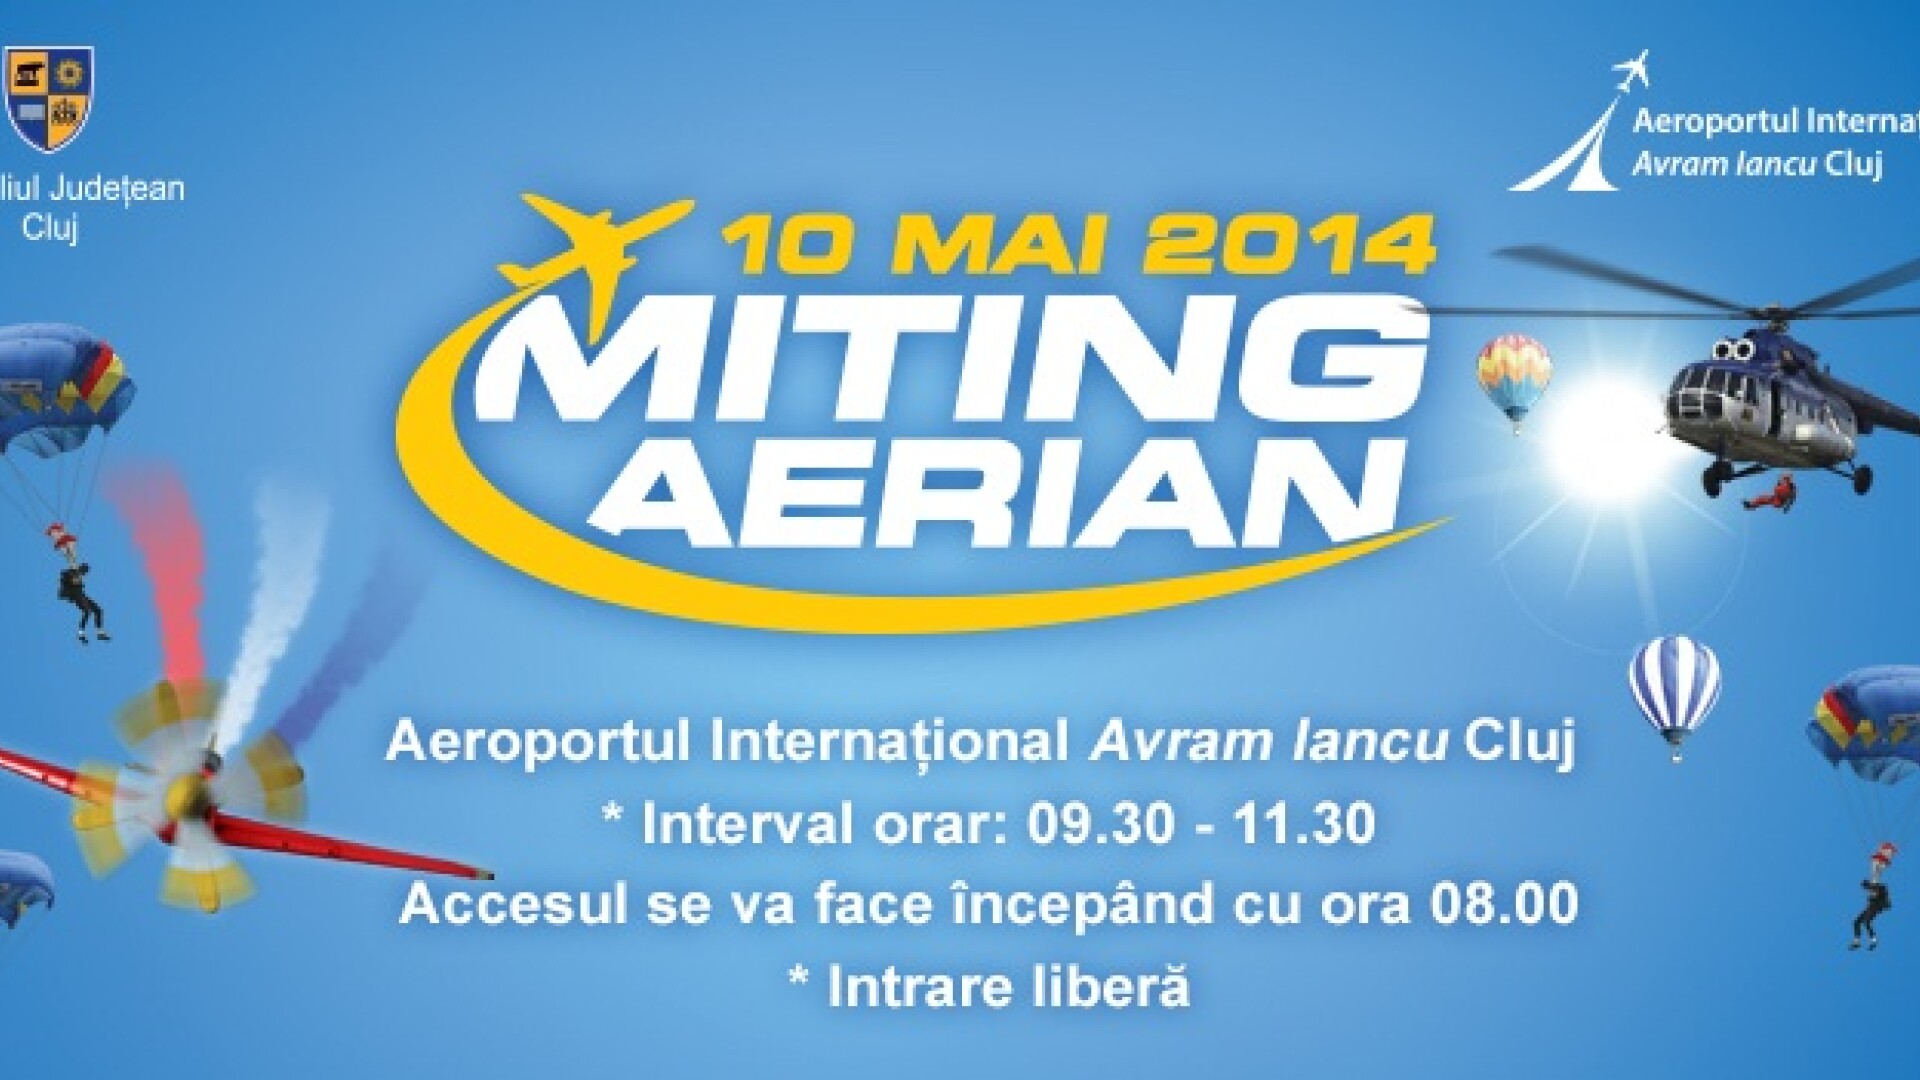 Spectacol aviatic in weekend pe Aeroportul International Avram Iancu Cluj-Napoca